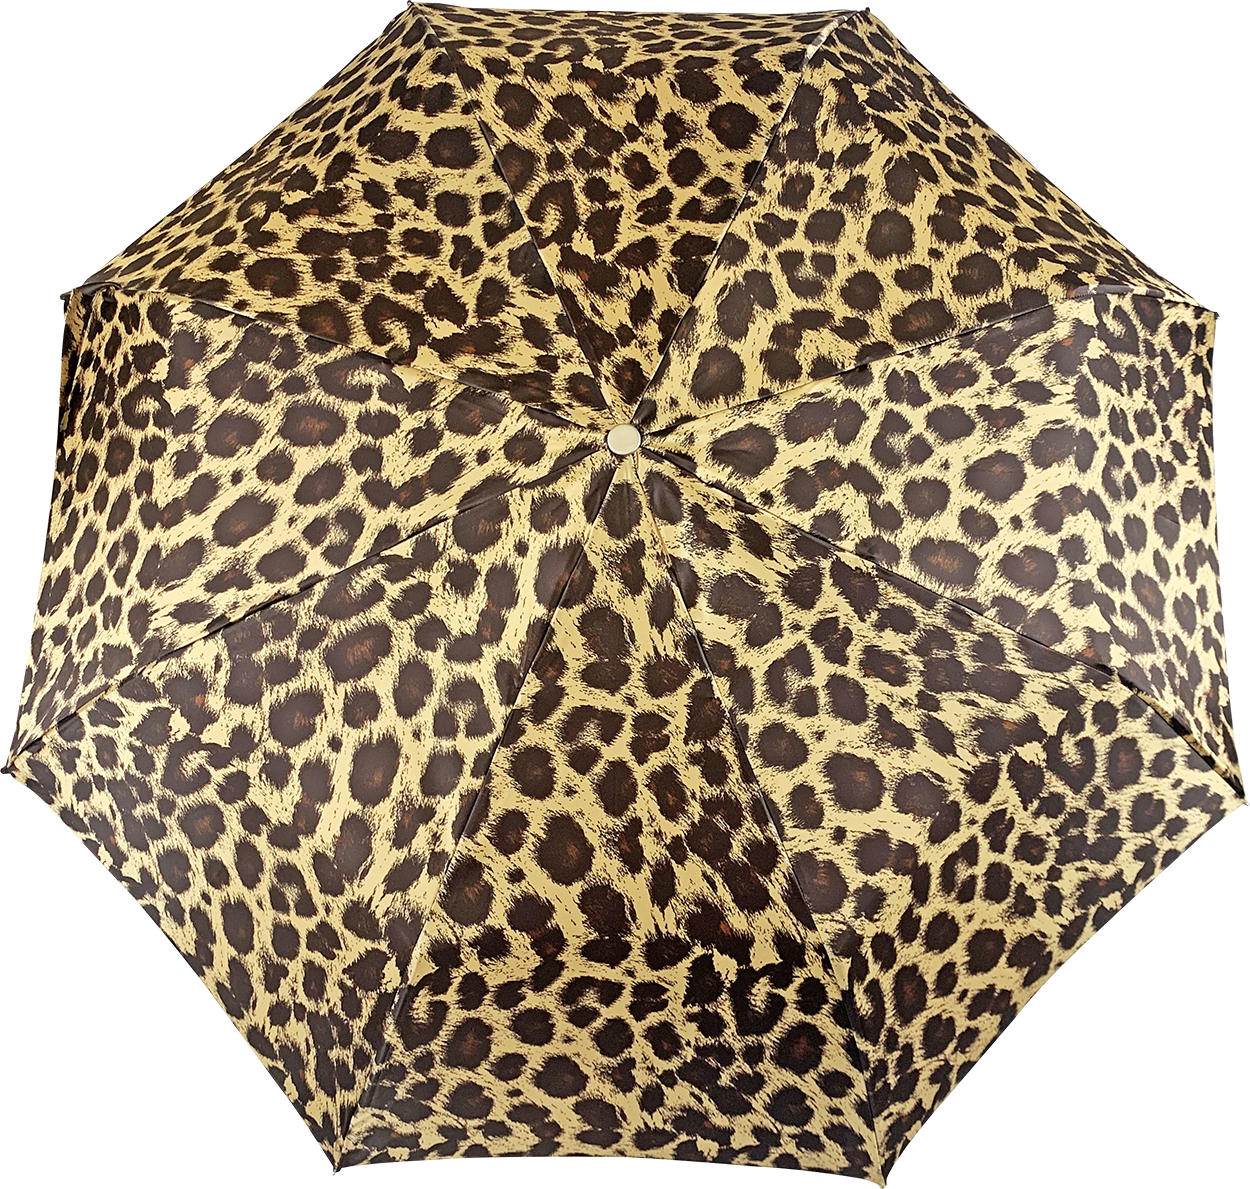 Elegant leopard design with filigree handle